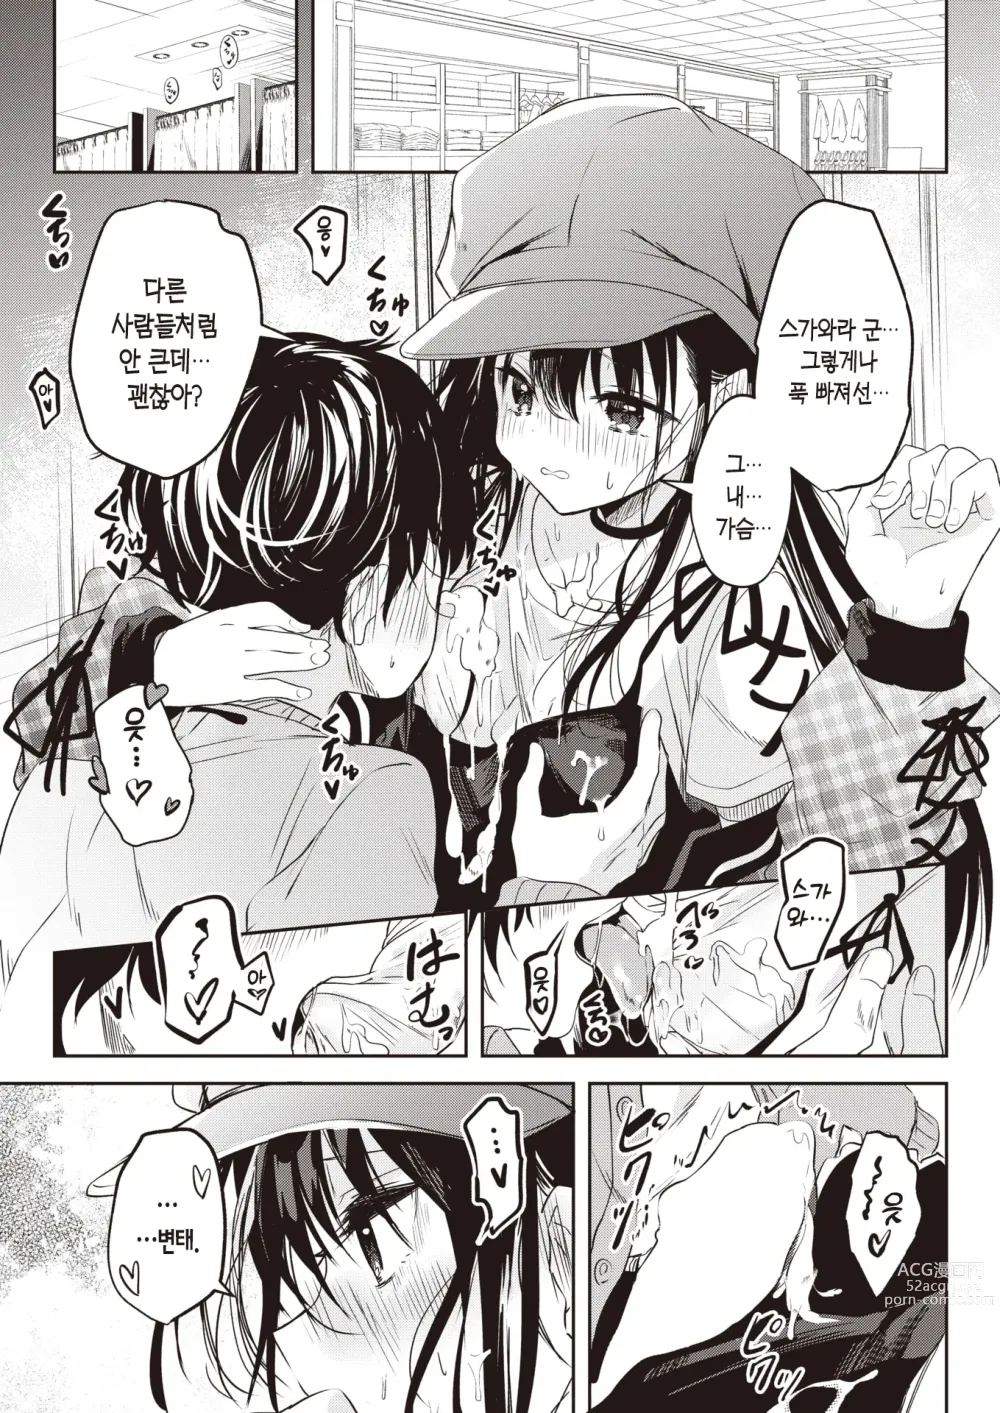 Page 6 of manga 처녀의 미열은 양열지극. ~처서~